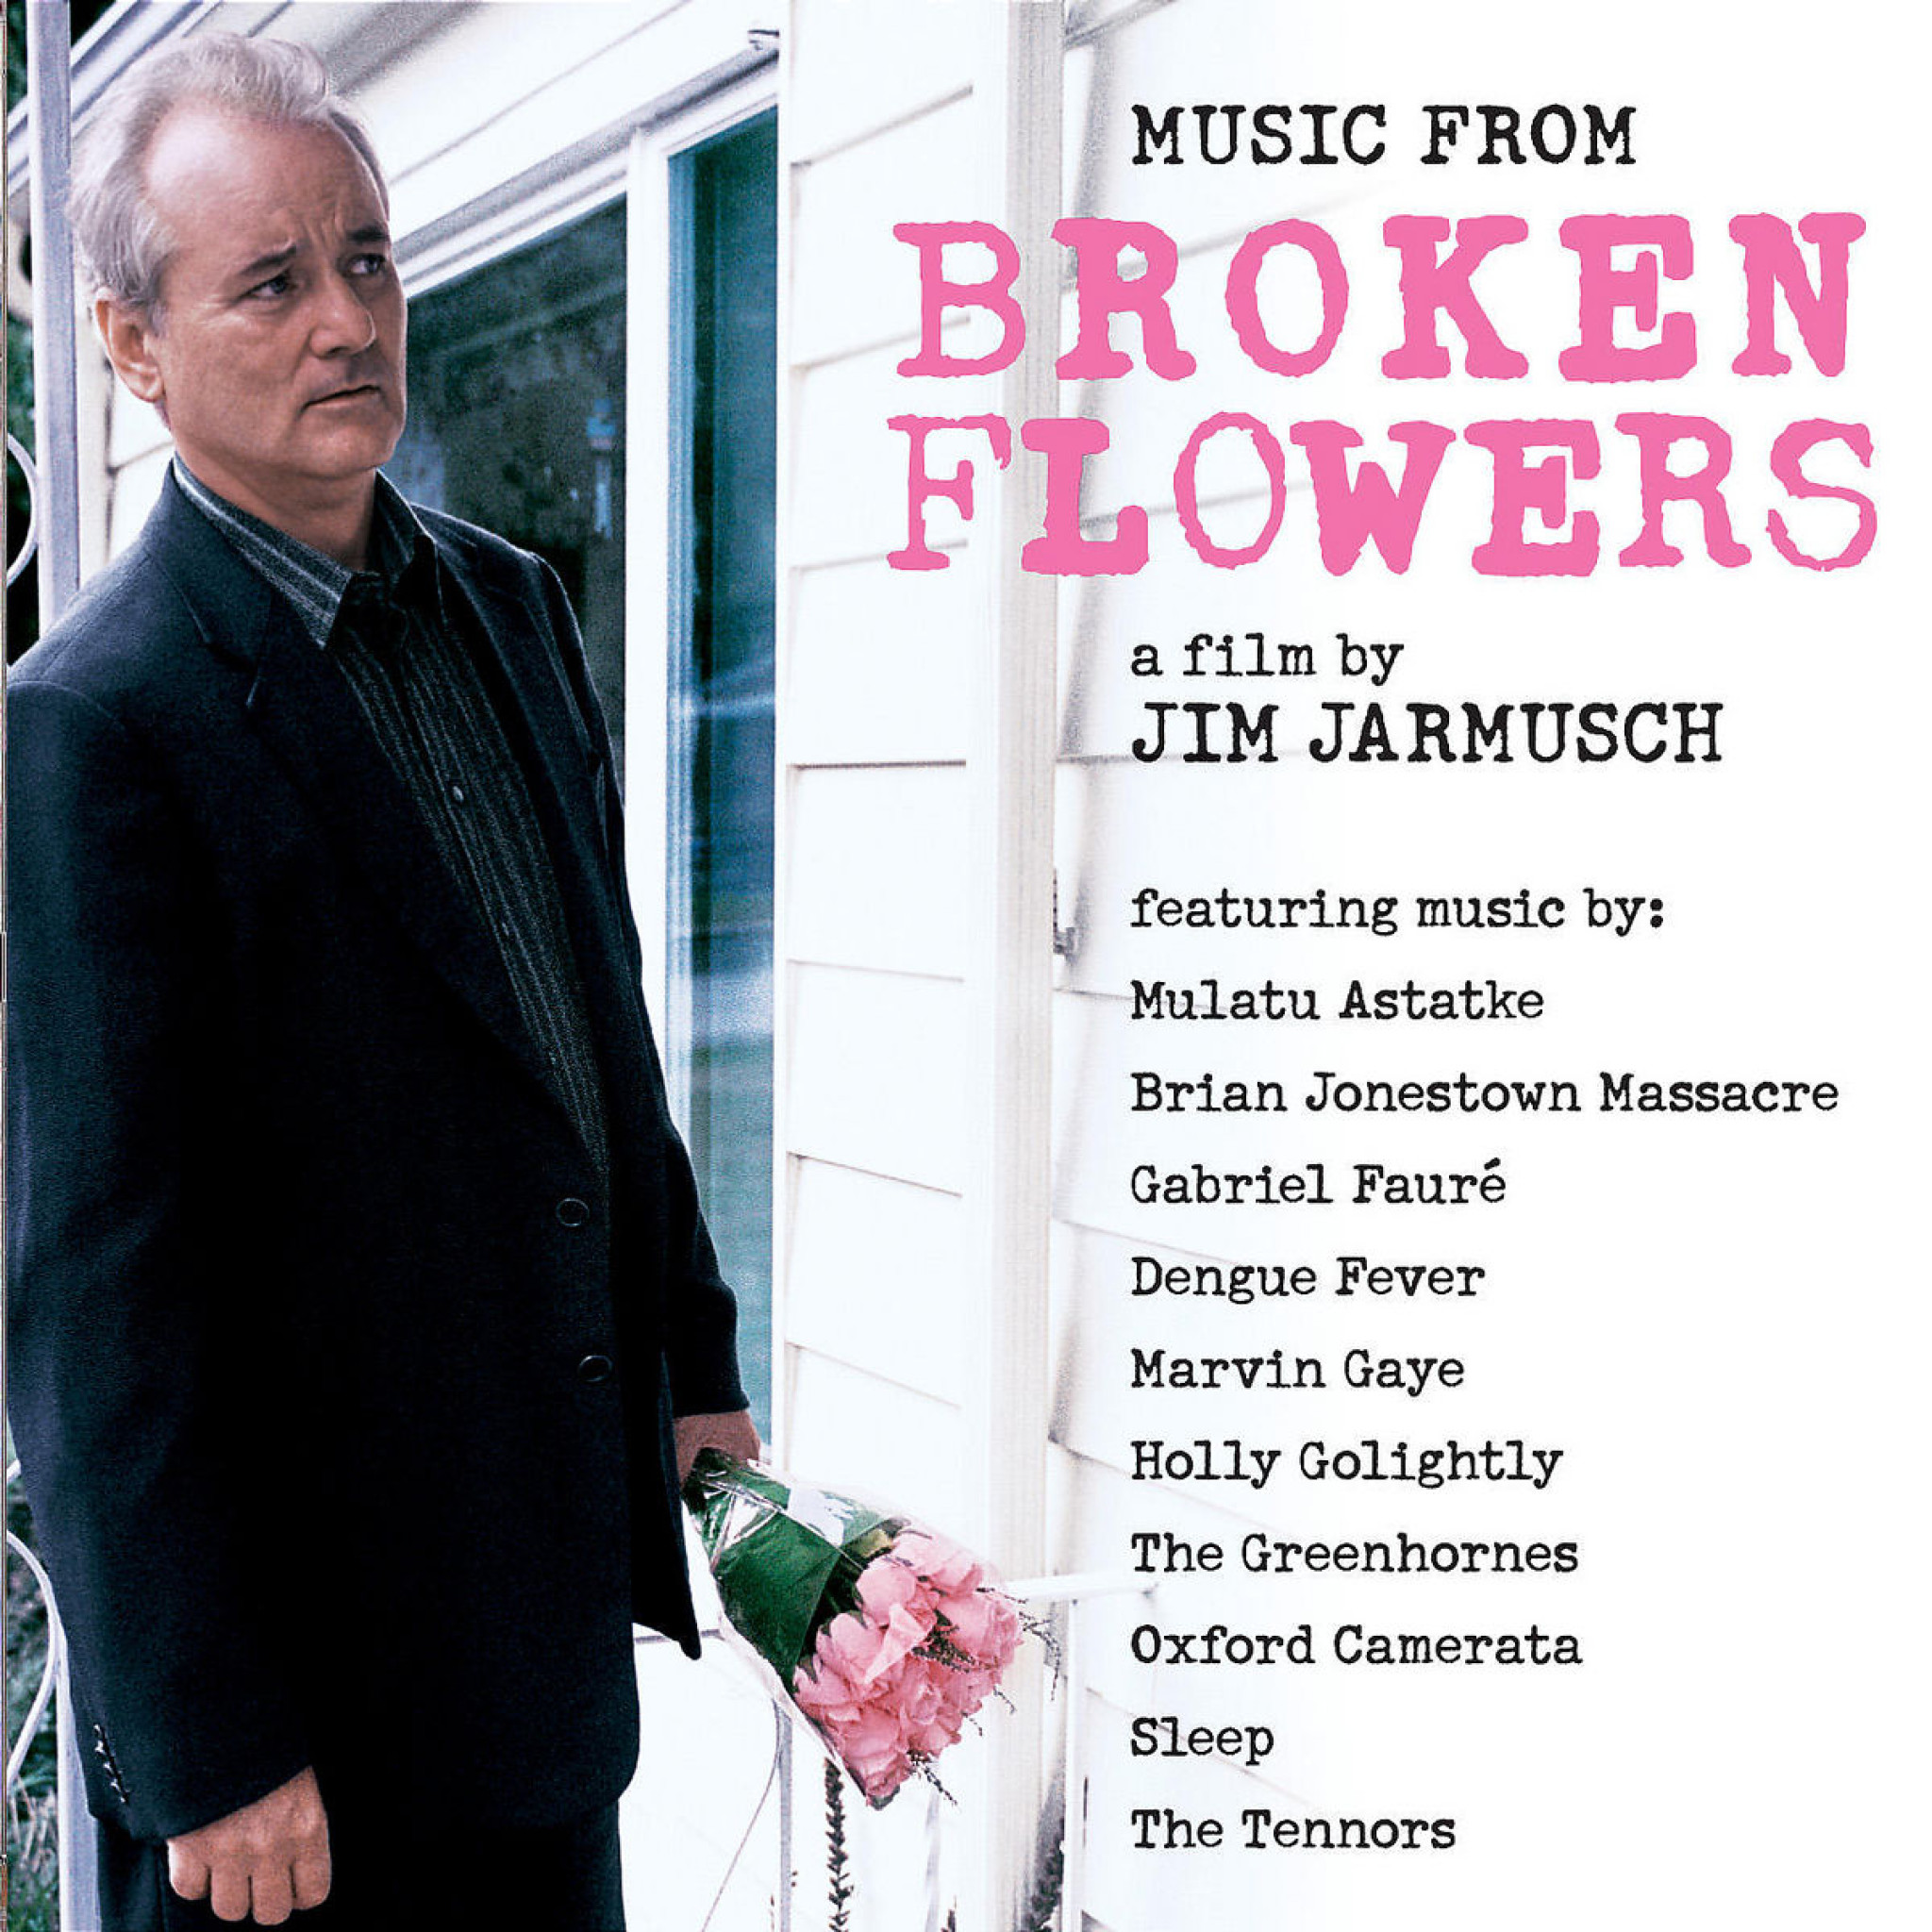 MUSIC FROM BROKEN FLOWERS